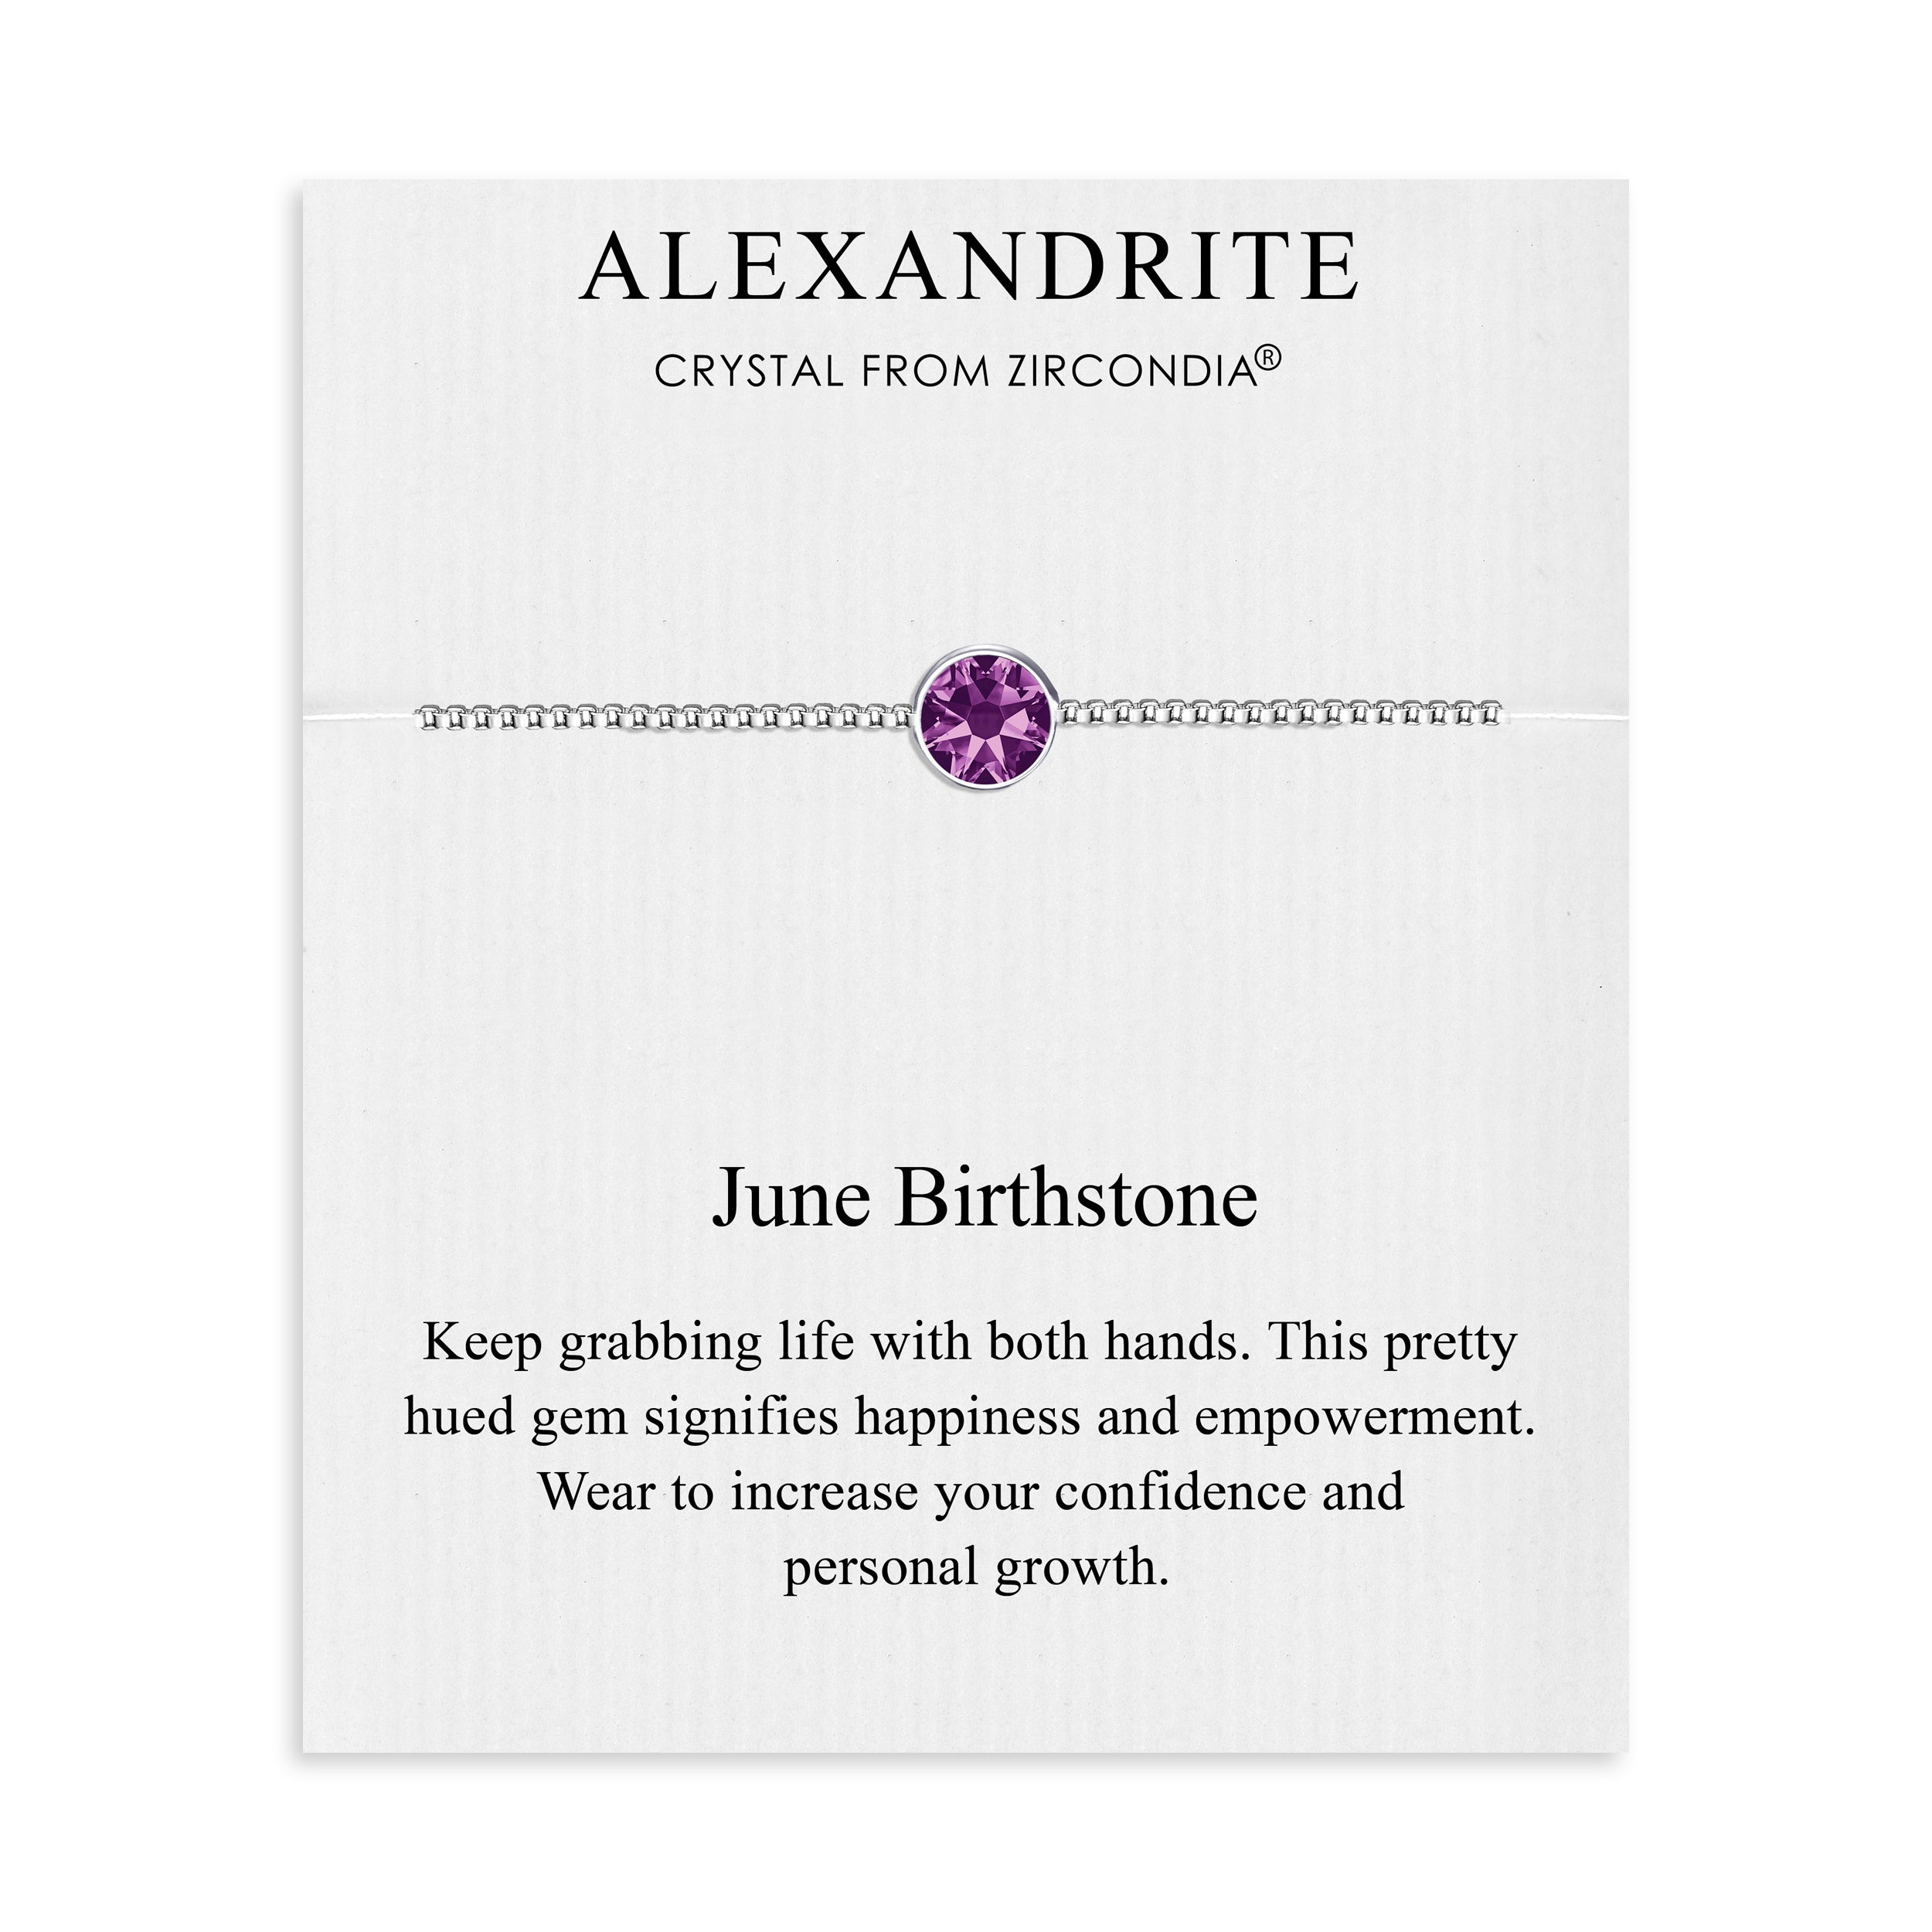 June (Alexandrite) Birthstone Bracelet Created with Zircondia® Crystals by Philip Jones Jewellery